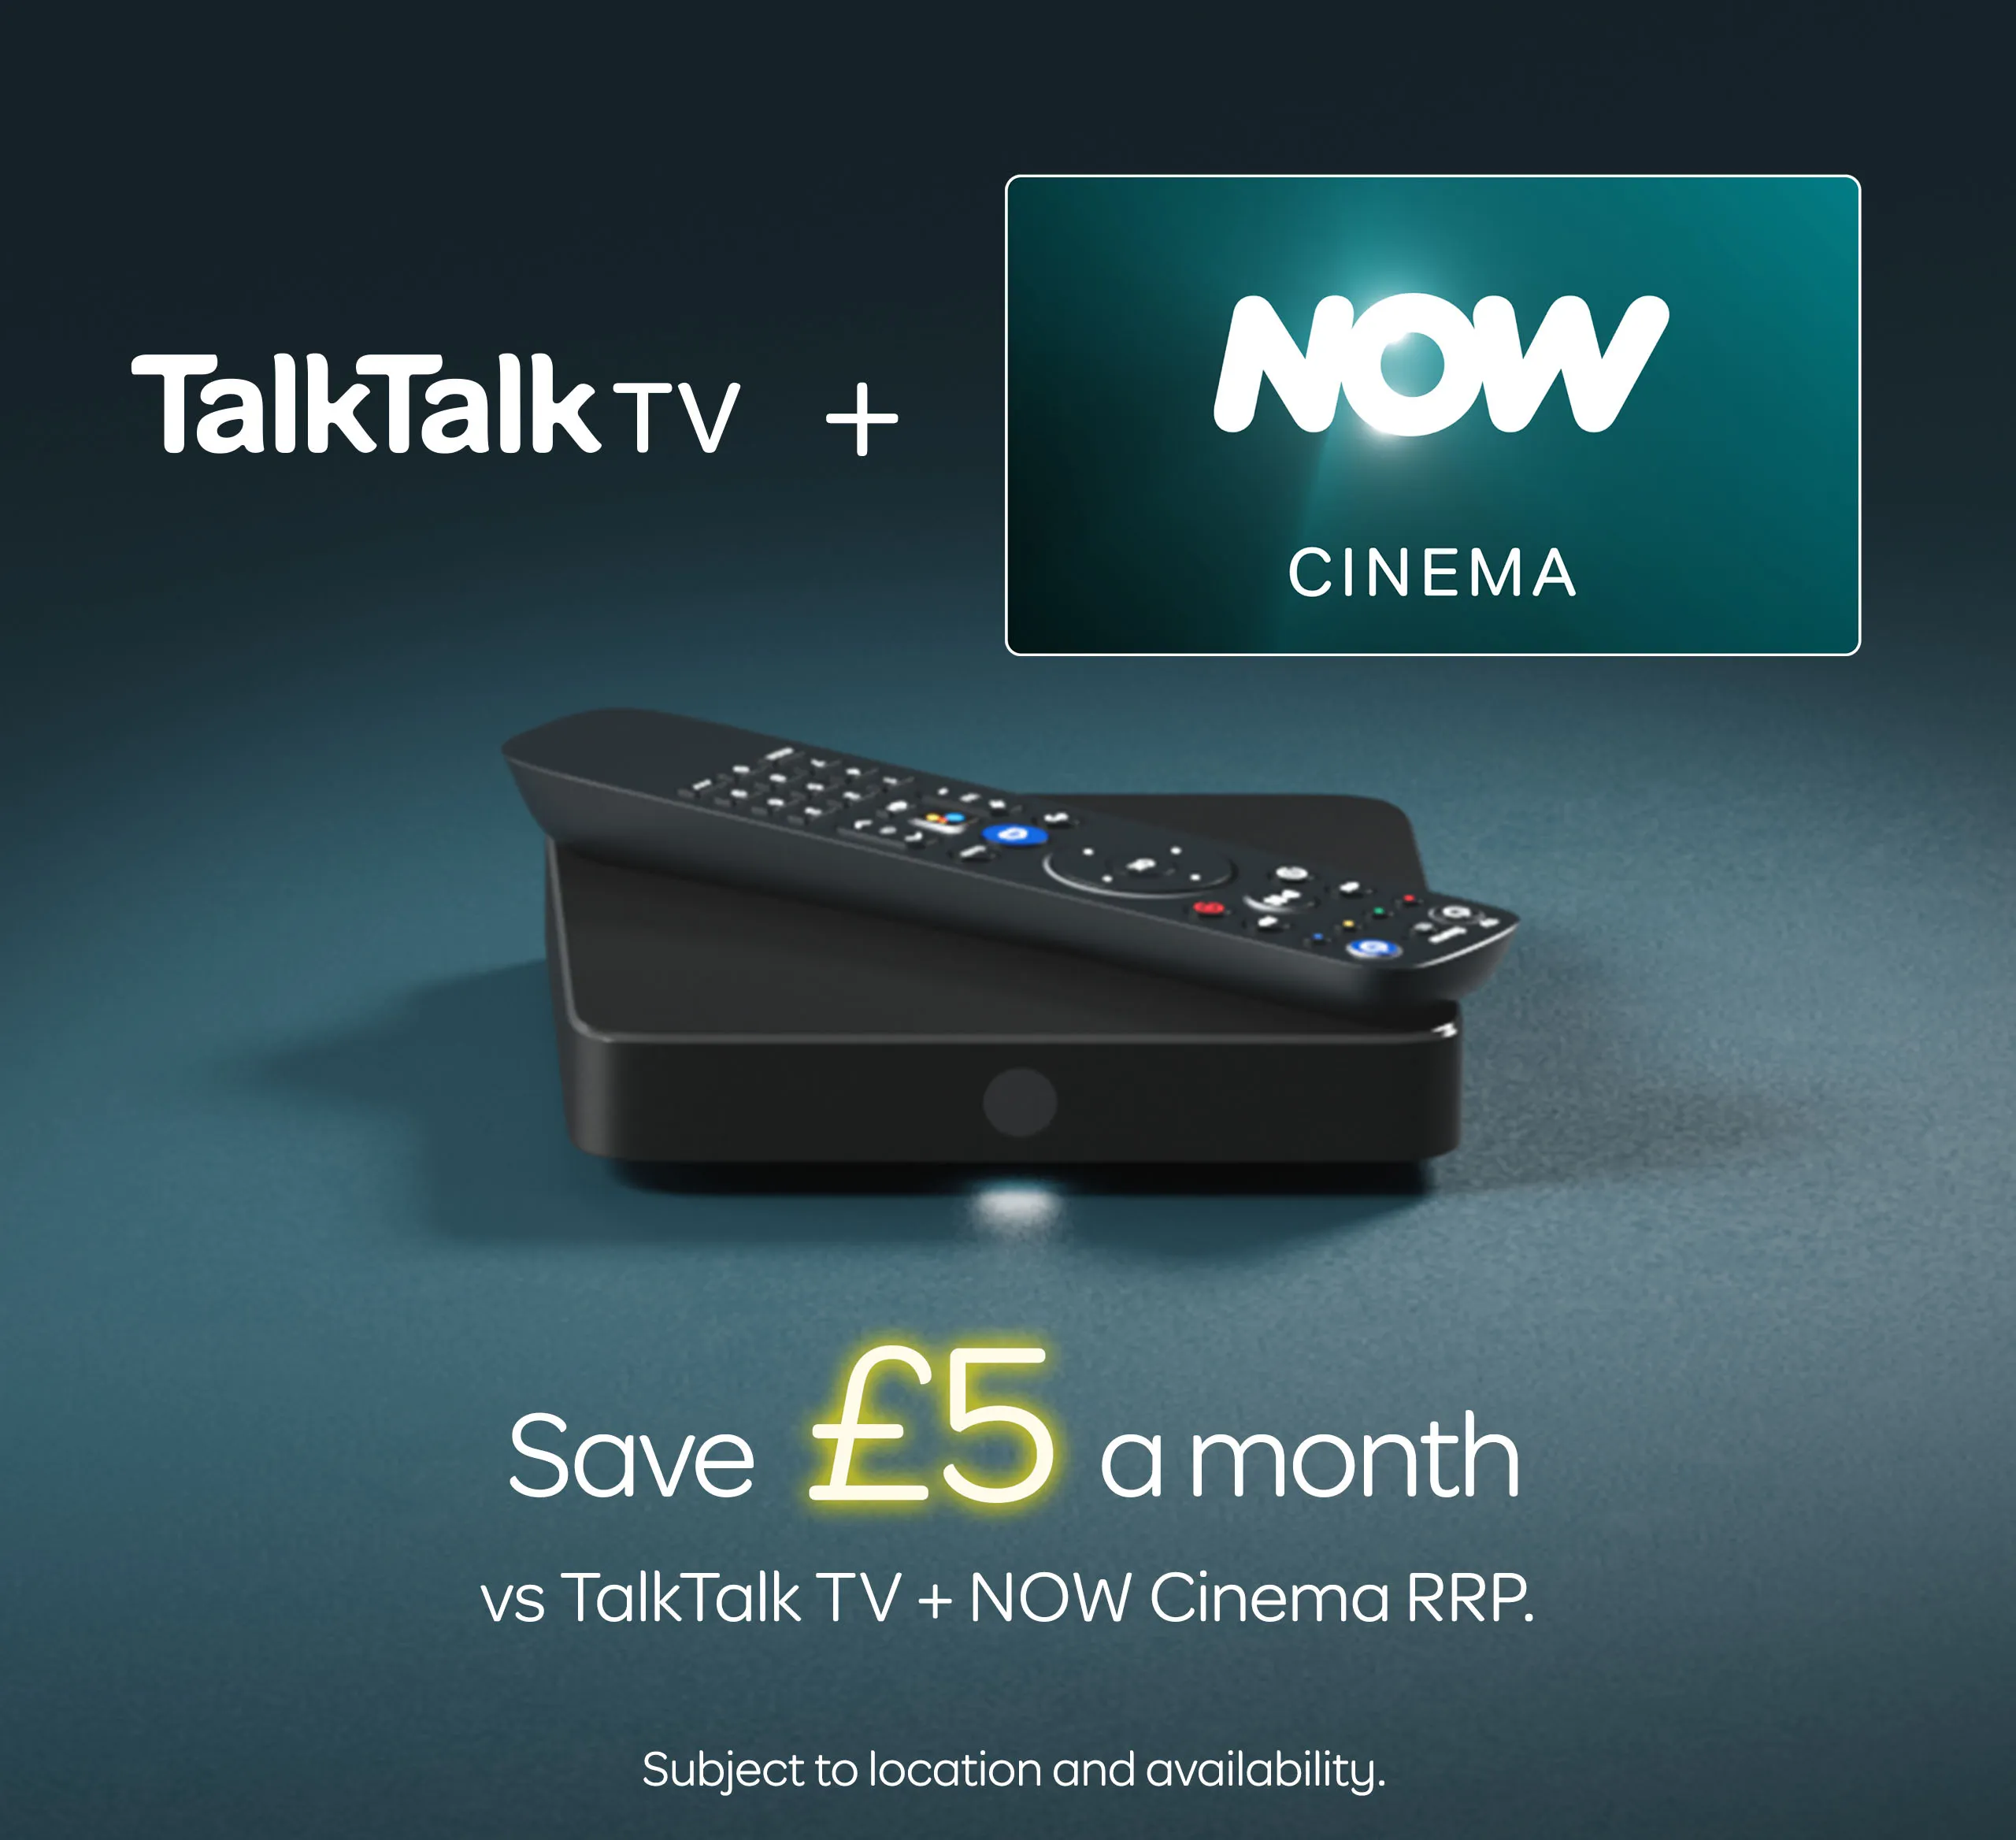 Save £5 a month vs. TalkTalk TV + NOW Cinema RRP.